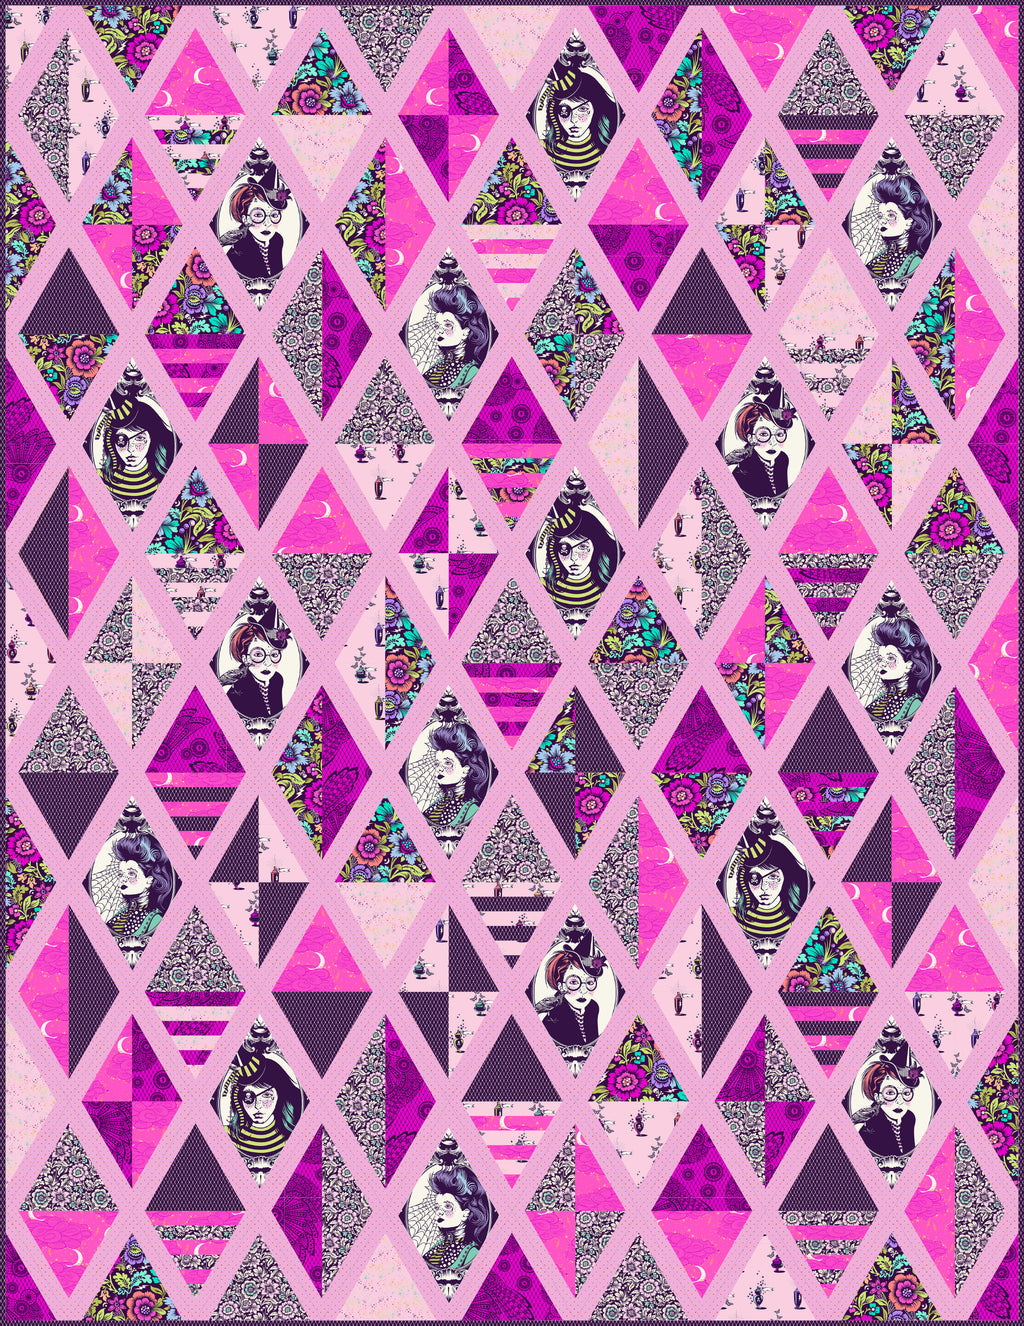 Nightshade (Déjà Vu) designed by Tula Pink Set Sail Quilt fabric pack.